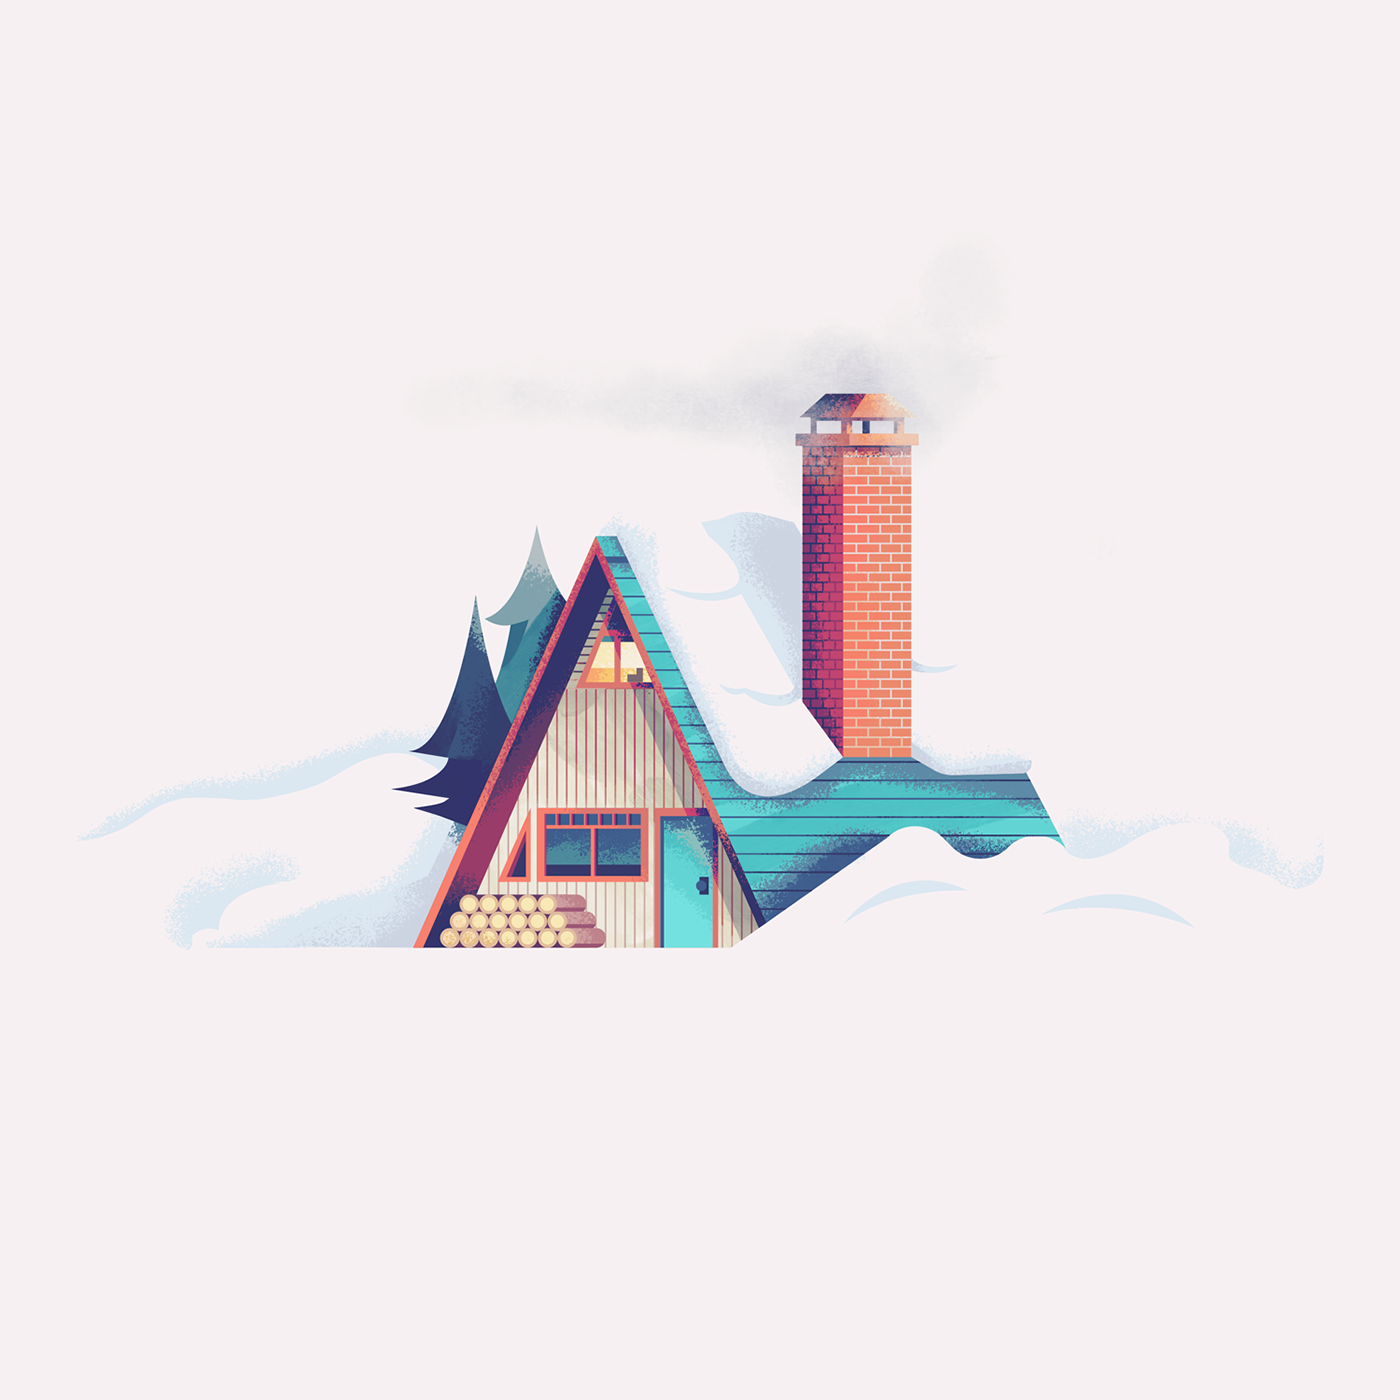 a frame Cottage cabin ILLUSTRATION  winter texture